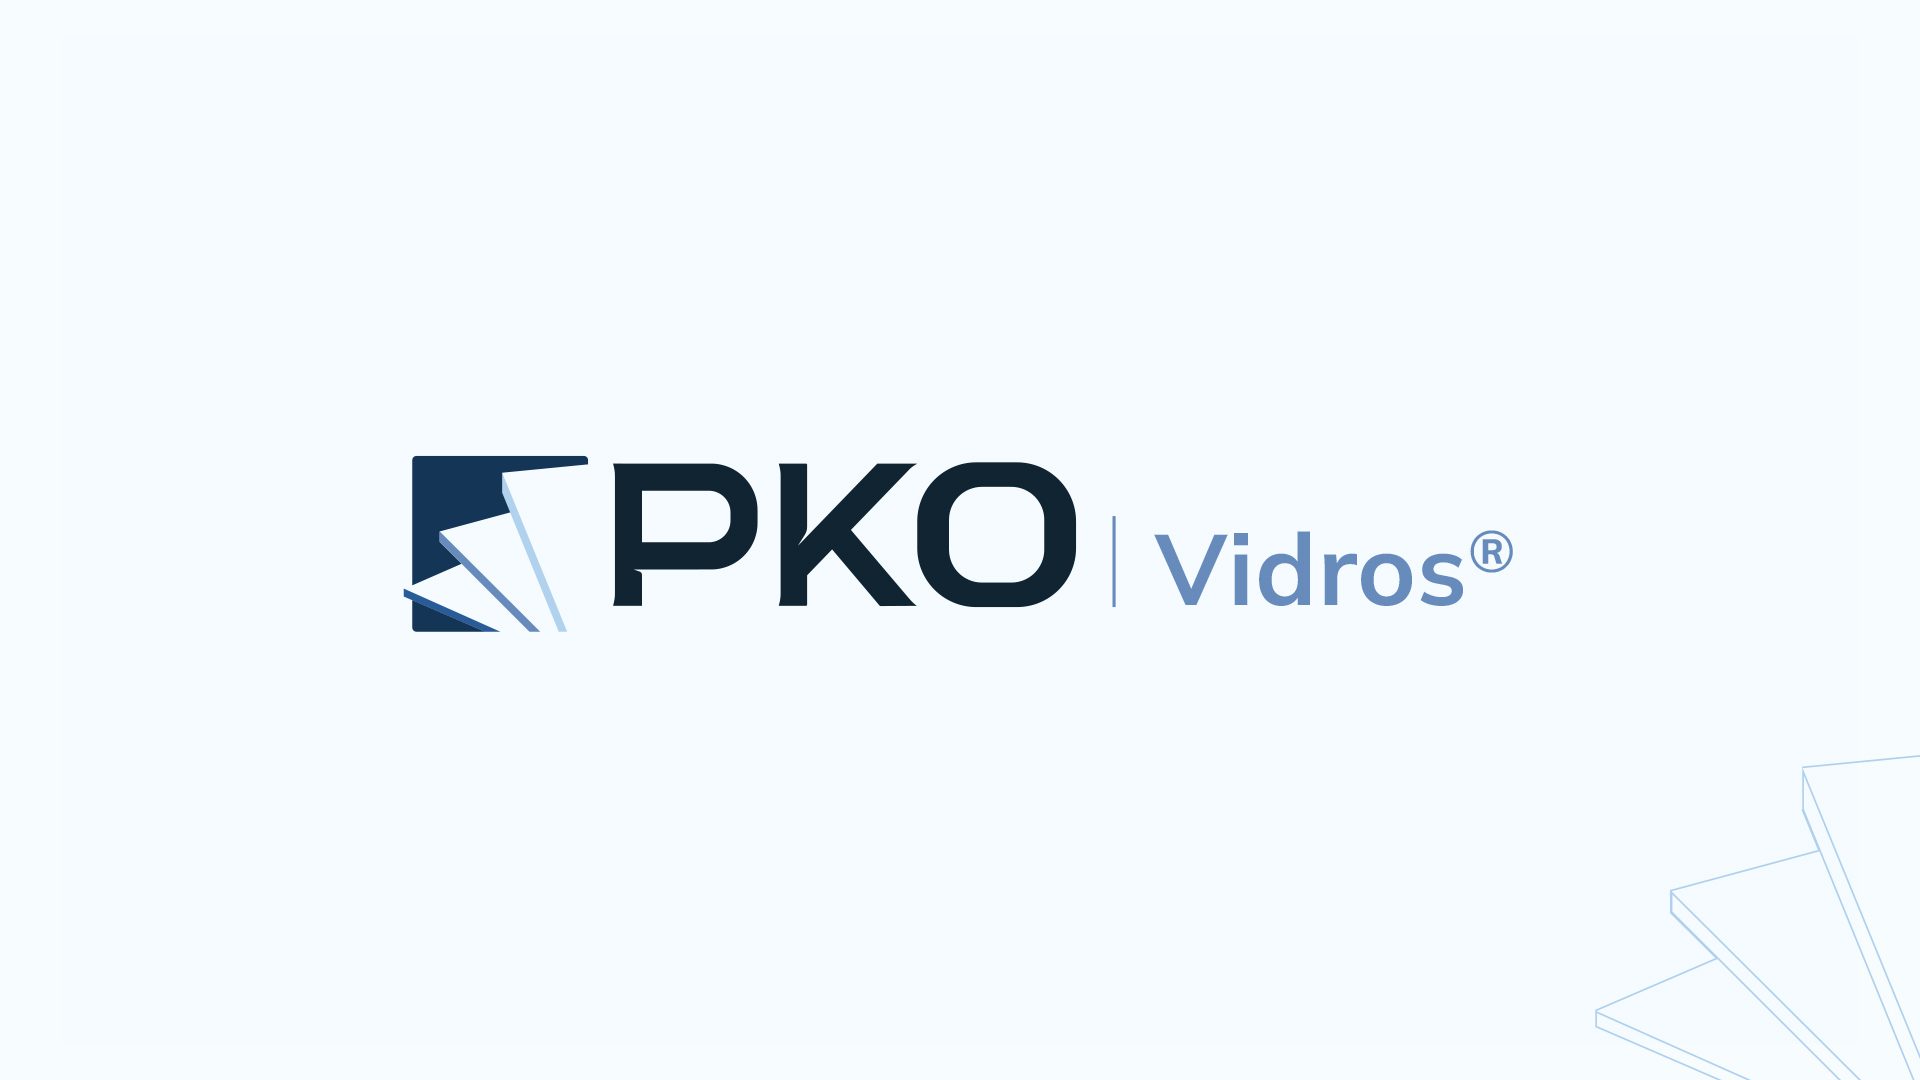 pko - pko vidros - posicionamento de marca pko - pko do brasil - beneficiadora de vidros